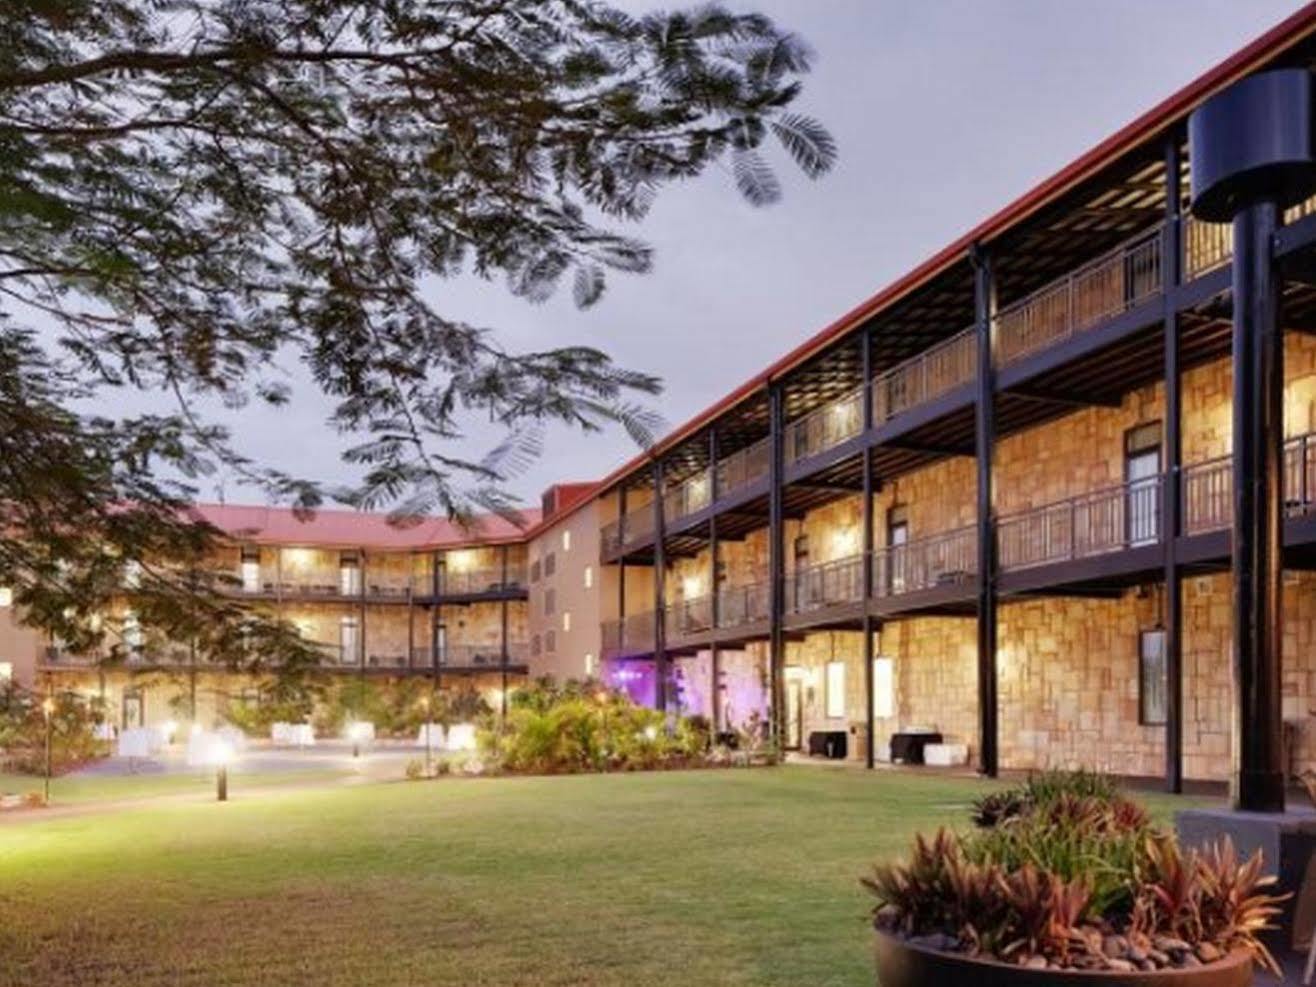 The Esplanade Hotel Port Hedland Exterior photo